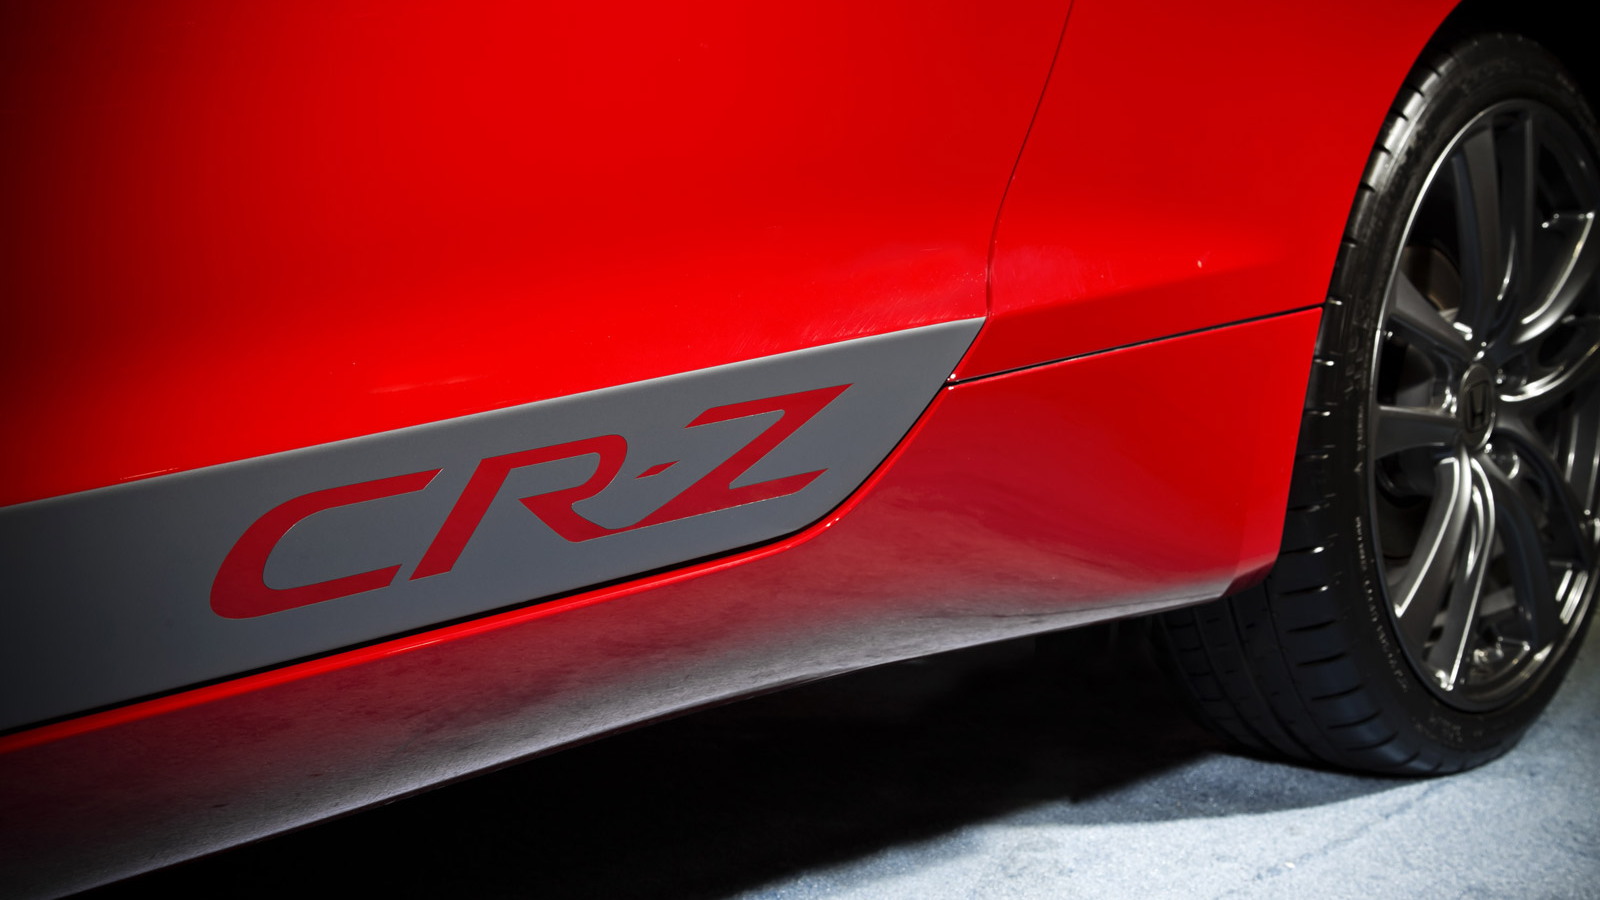 Supercharged Honda CR-Z concept, 2012 SEMA show